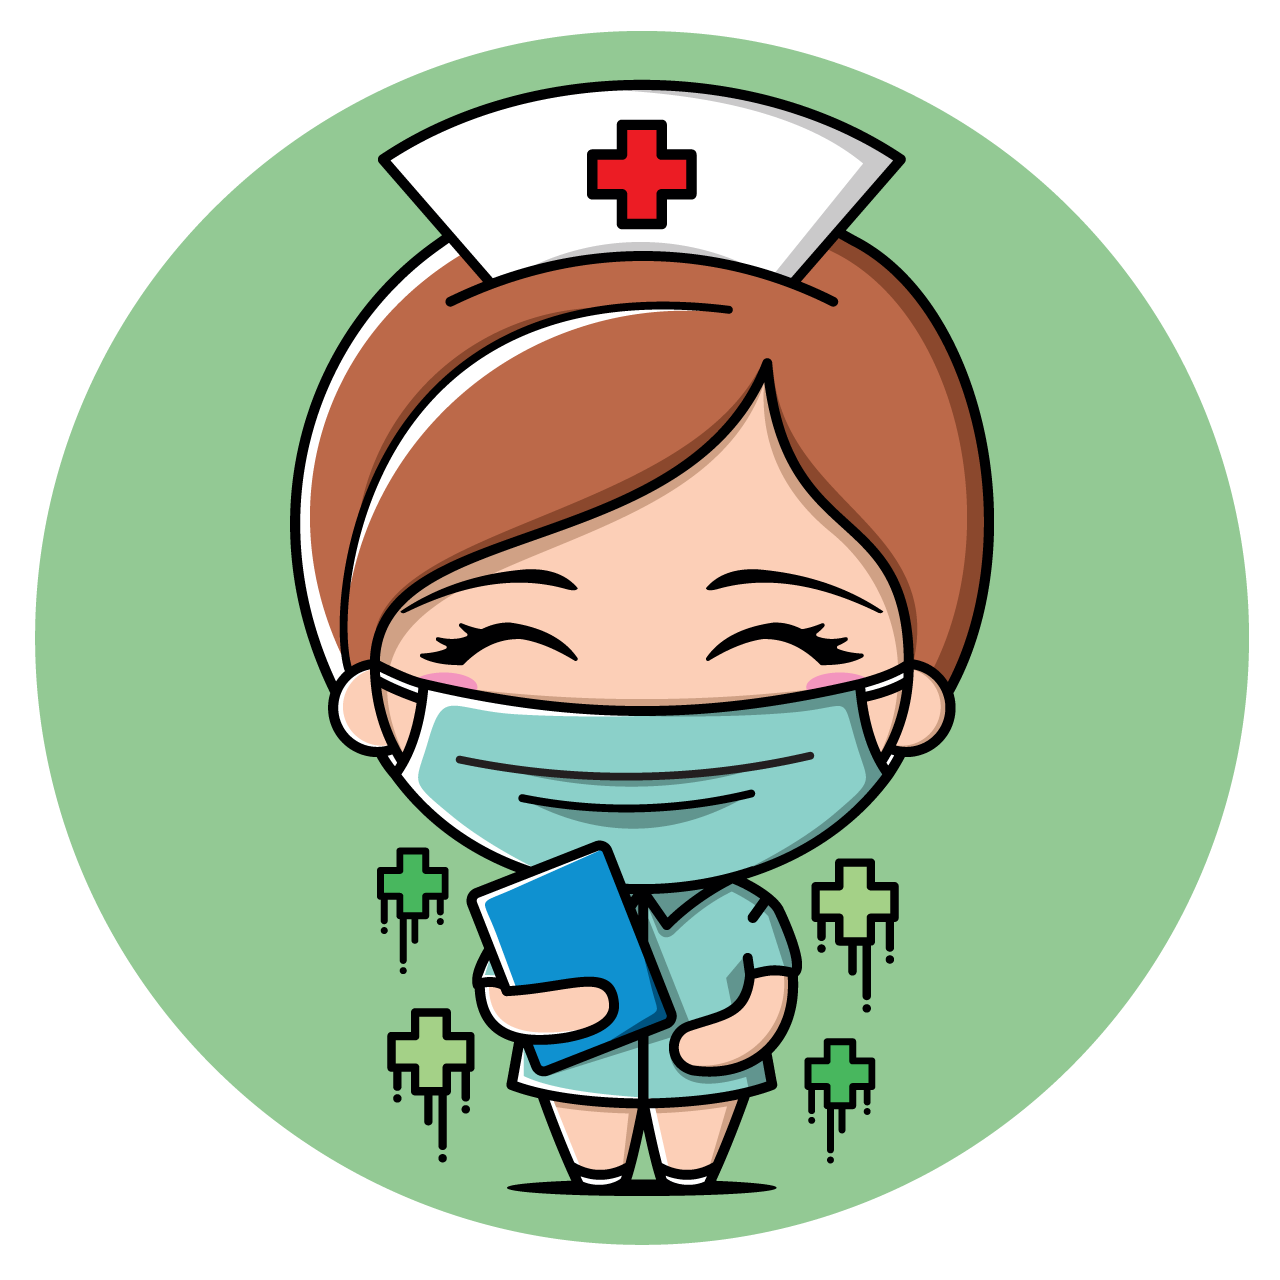 Cute nurse character design cartoon illustration image